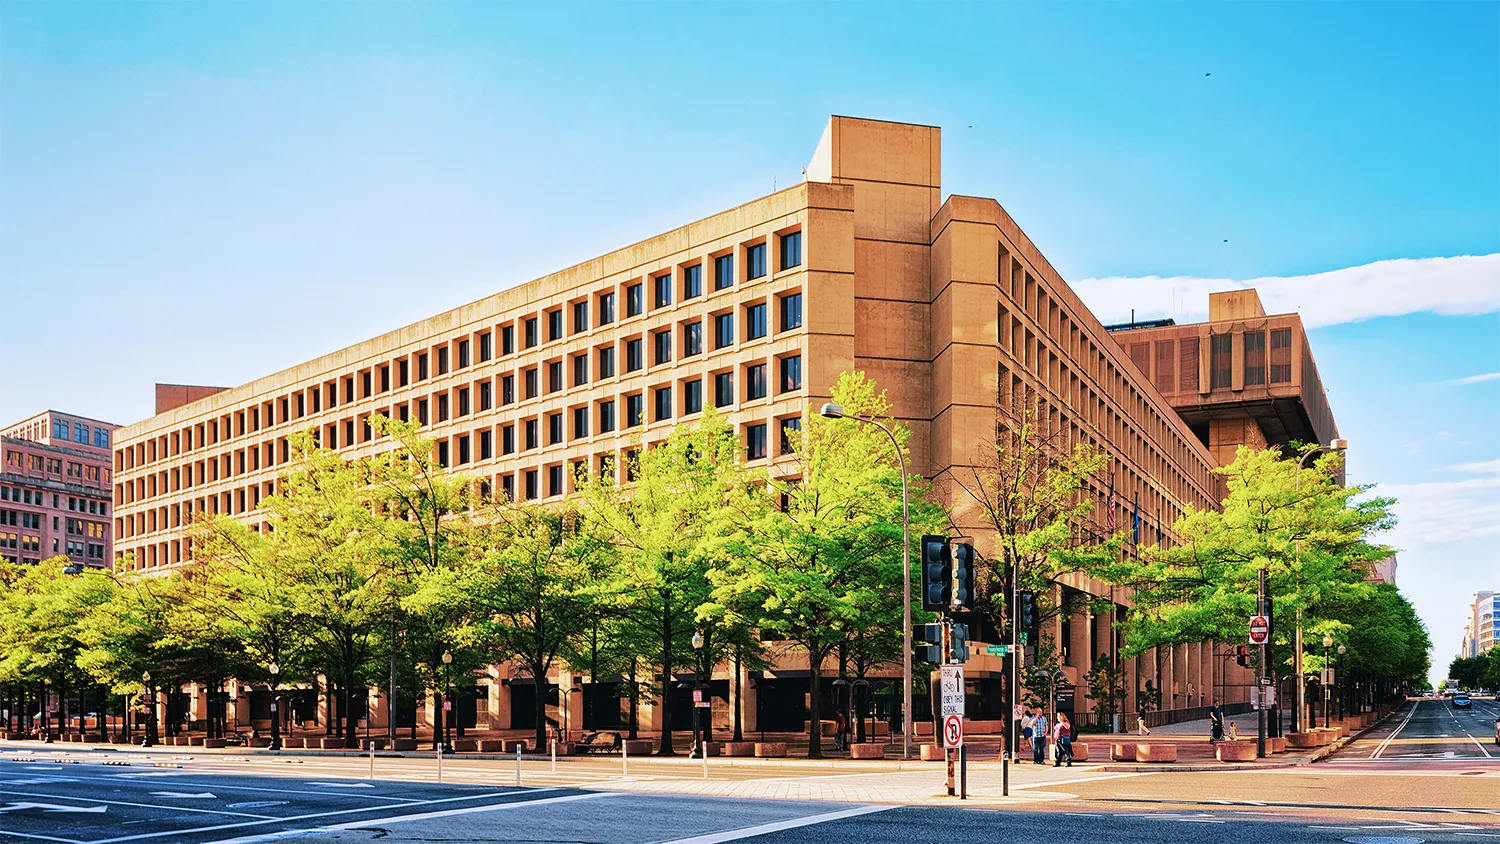 The FBI Headquarters in Washington, DC